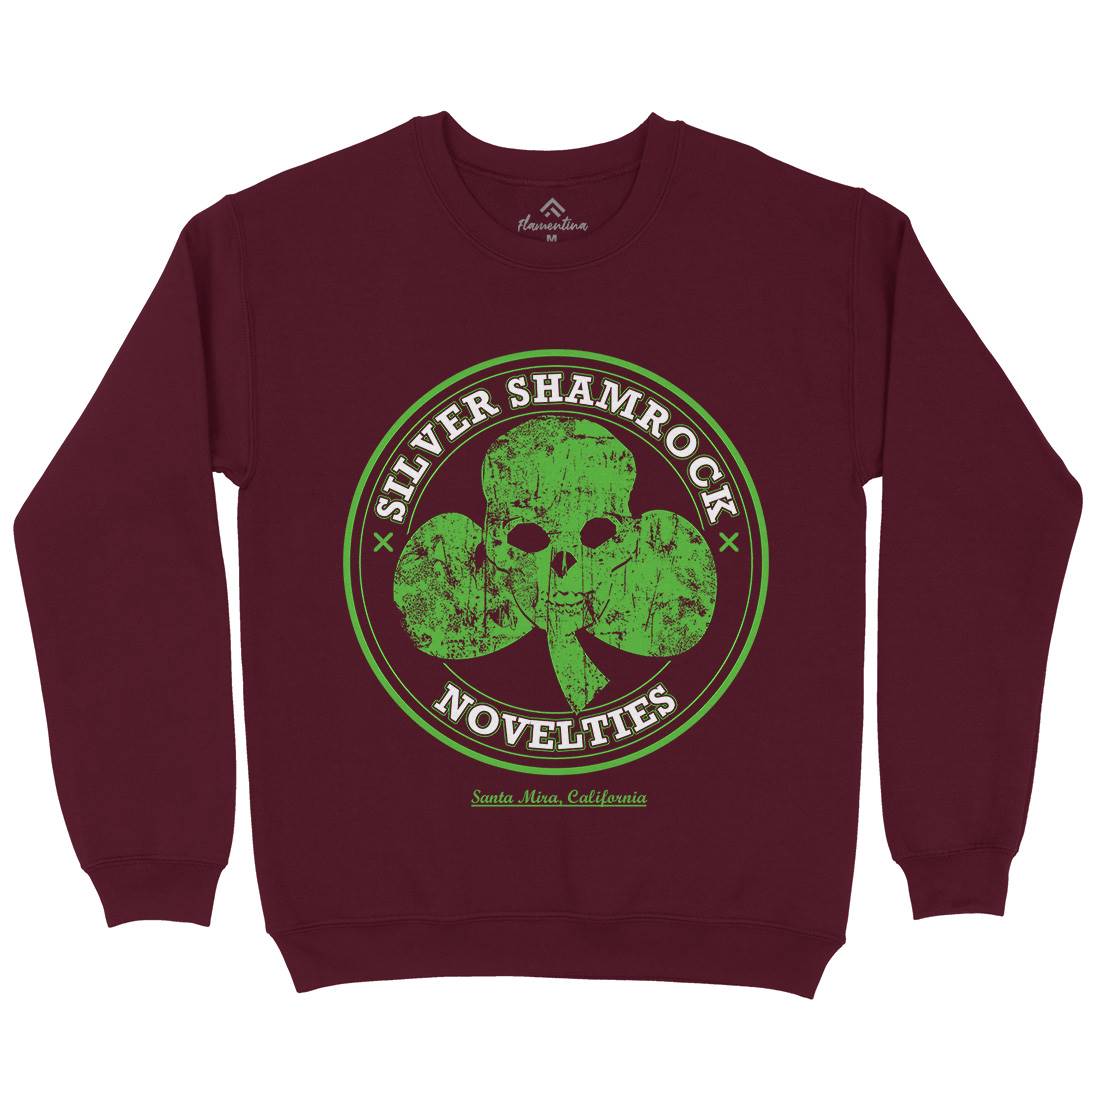 Silver Shamrock Novelties Kids Crew Neck Sweatshirt Horror D332